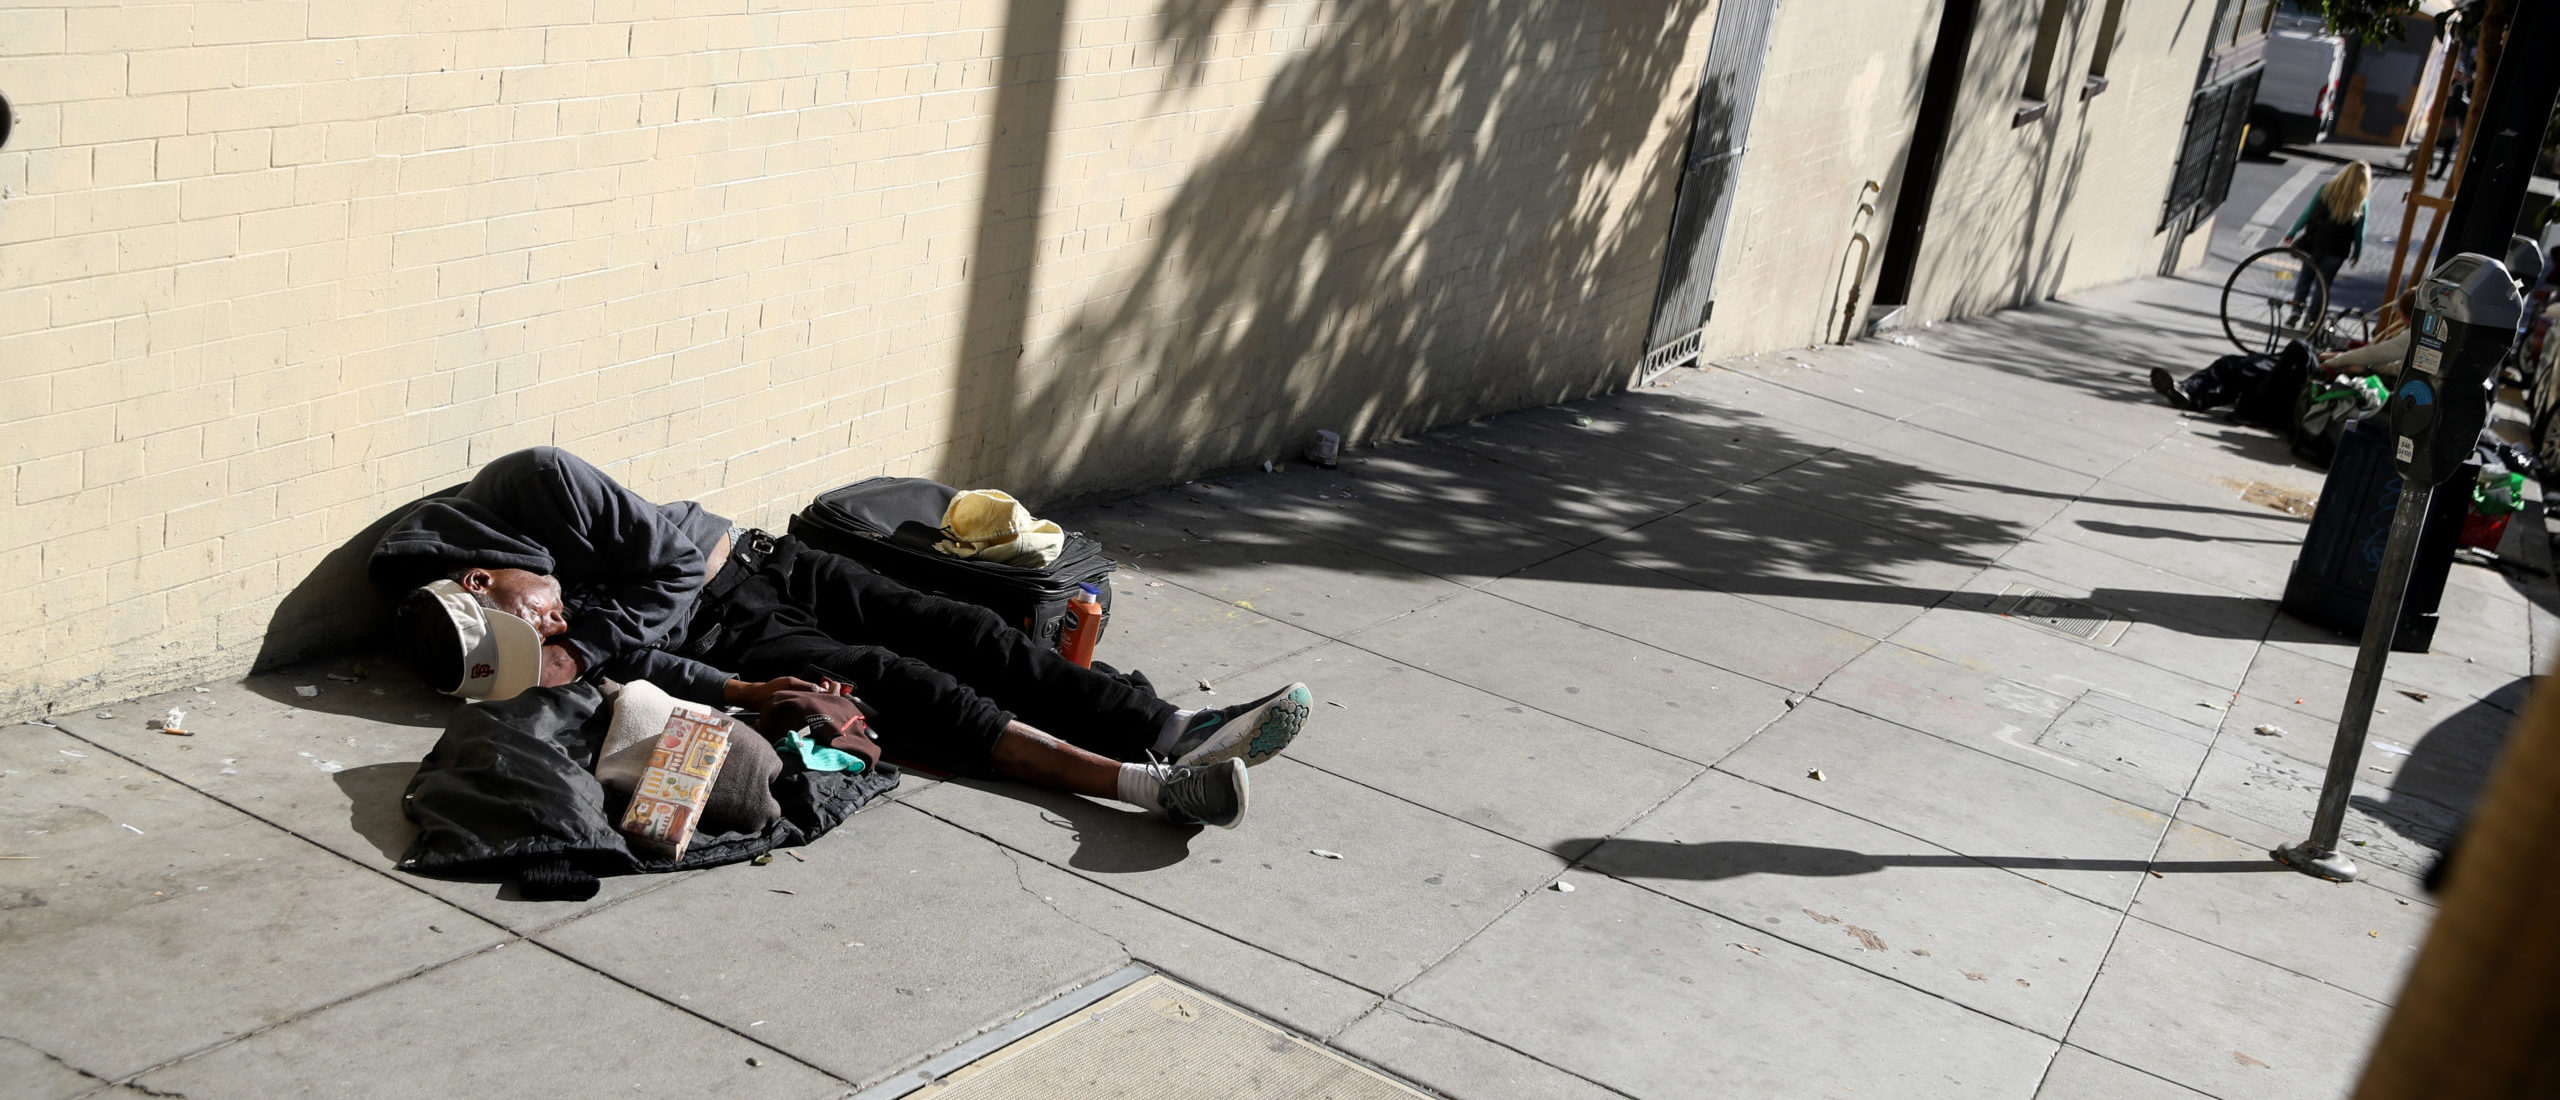 SAN FRANCISCO, CALIFORNIA - NOVEMBER 25: A homeless man sleeps on the sidewalk on November 25, 2019 in San Francisco, California. (Photo by Justin Sullivan/Getty Images)